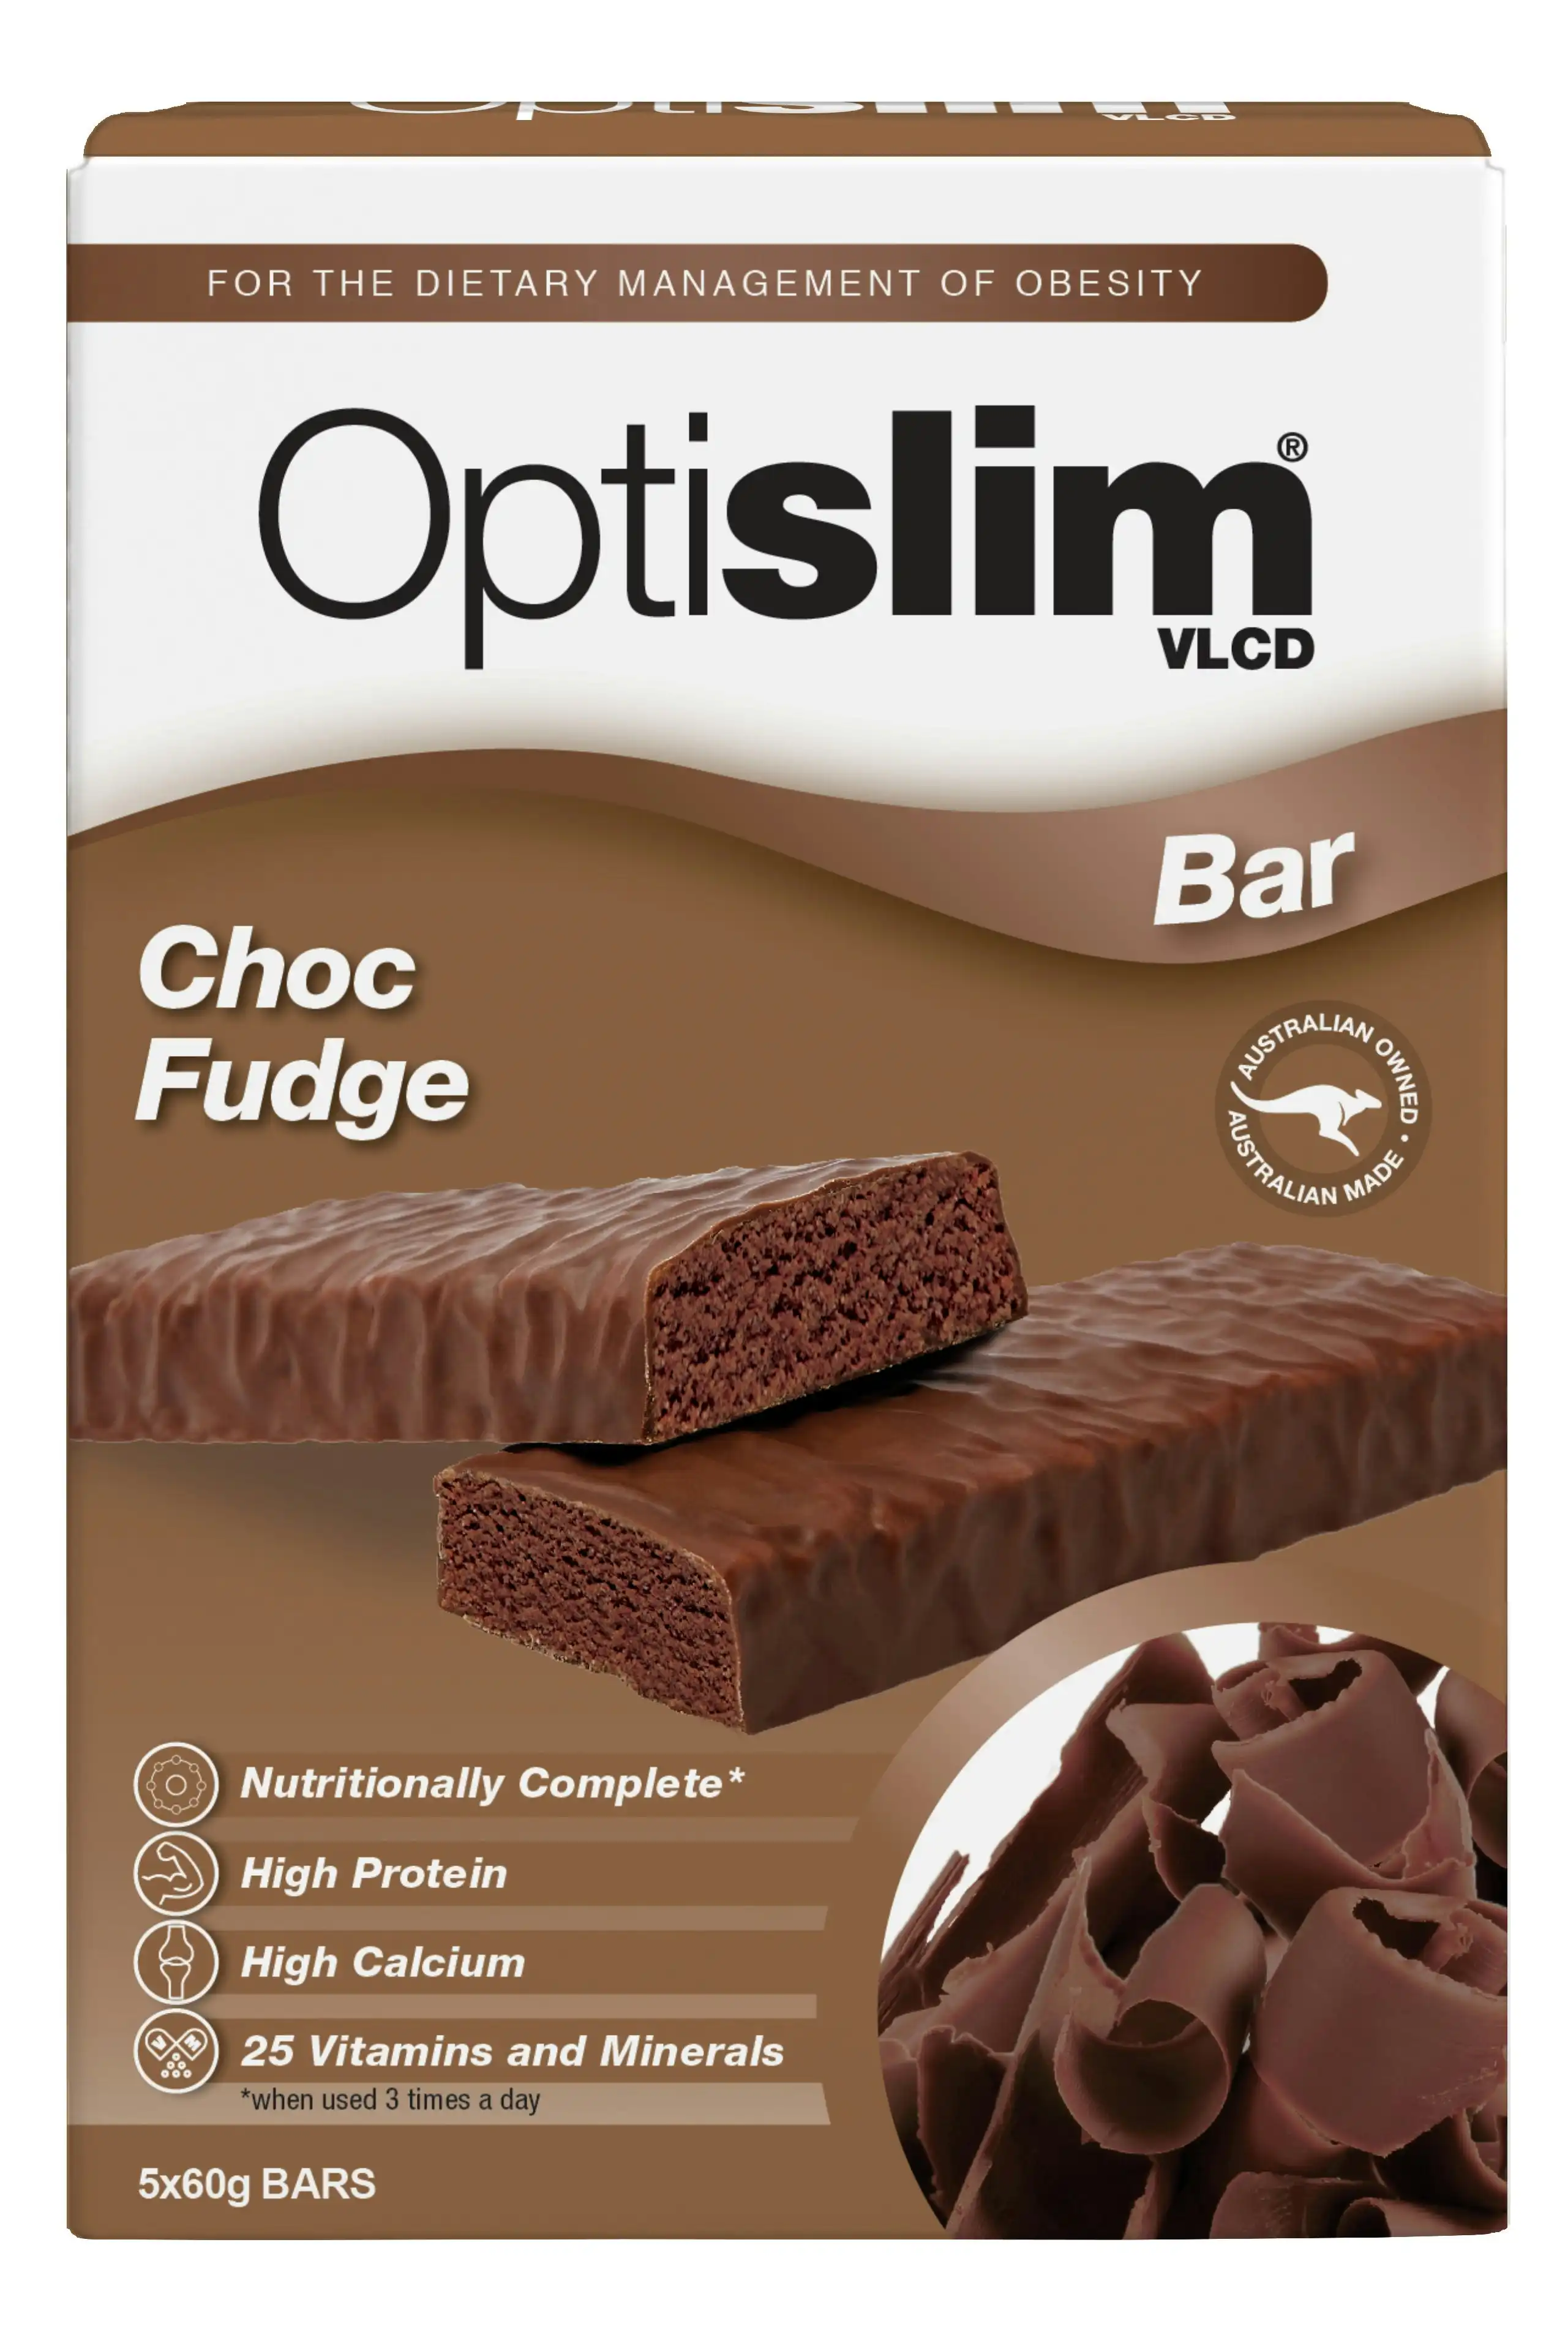 OptiSlim VLCD Choc Fudge Bar 5X60g